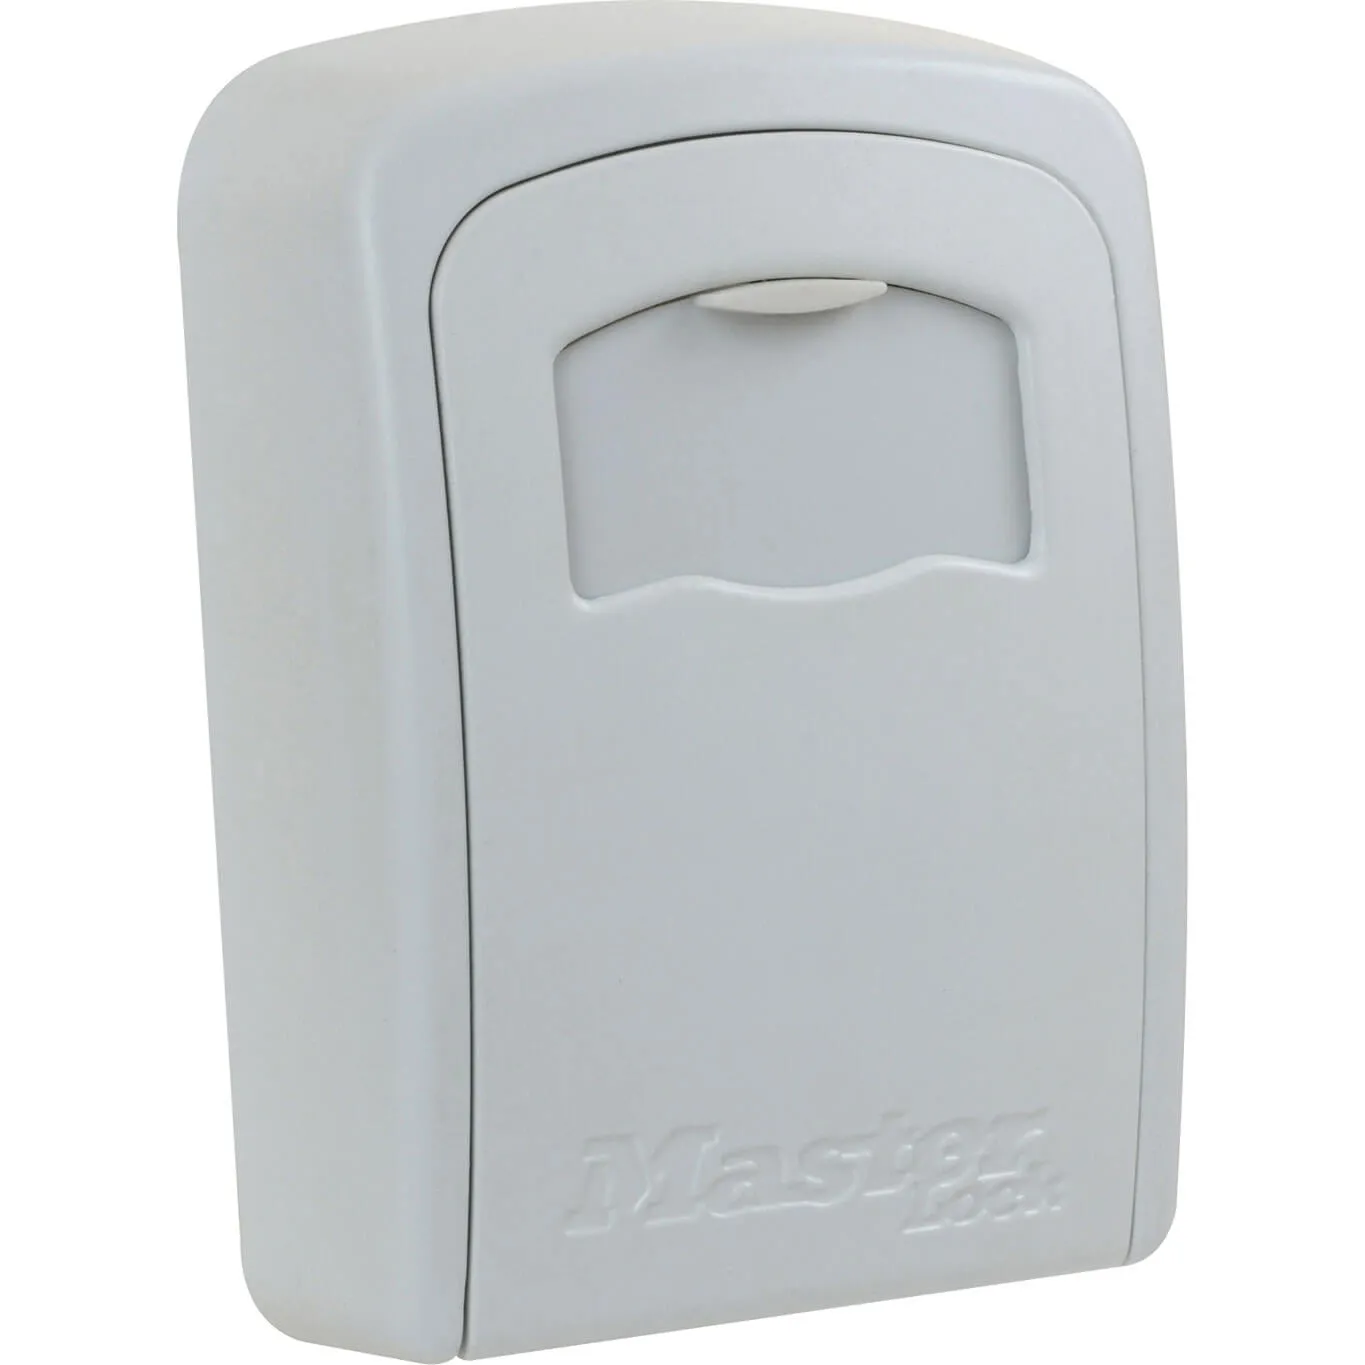 Masterlock Wall Mounted Key Safe Cream